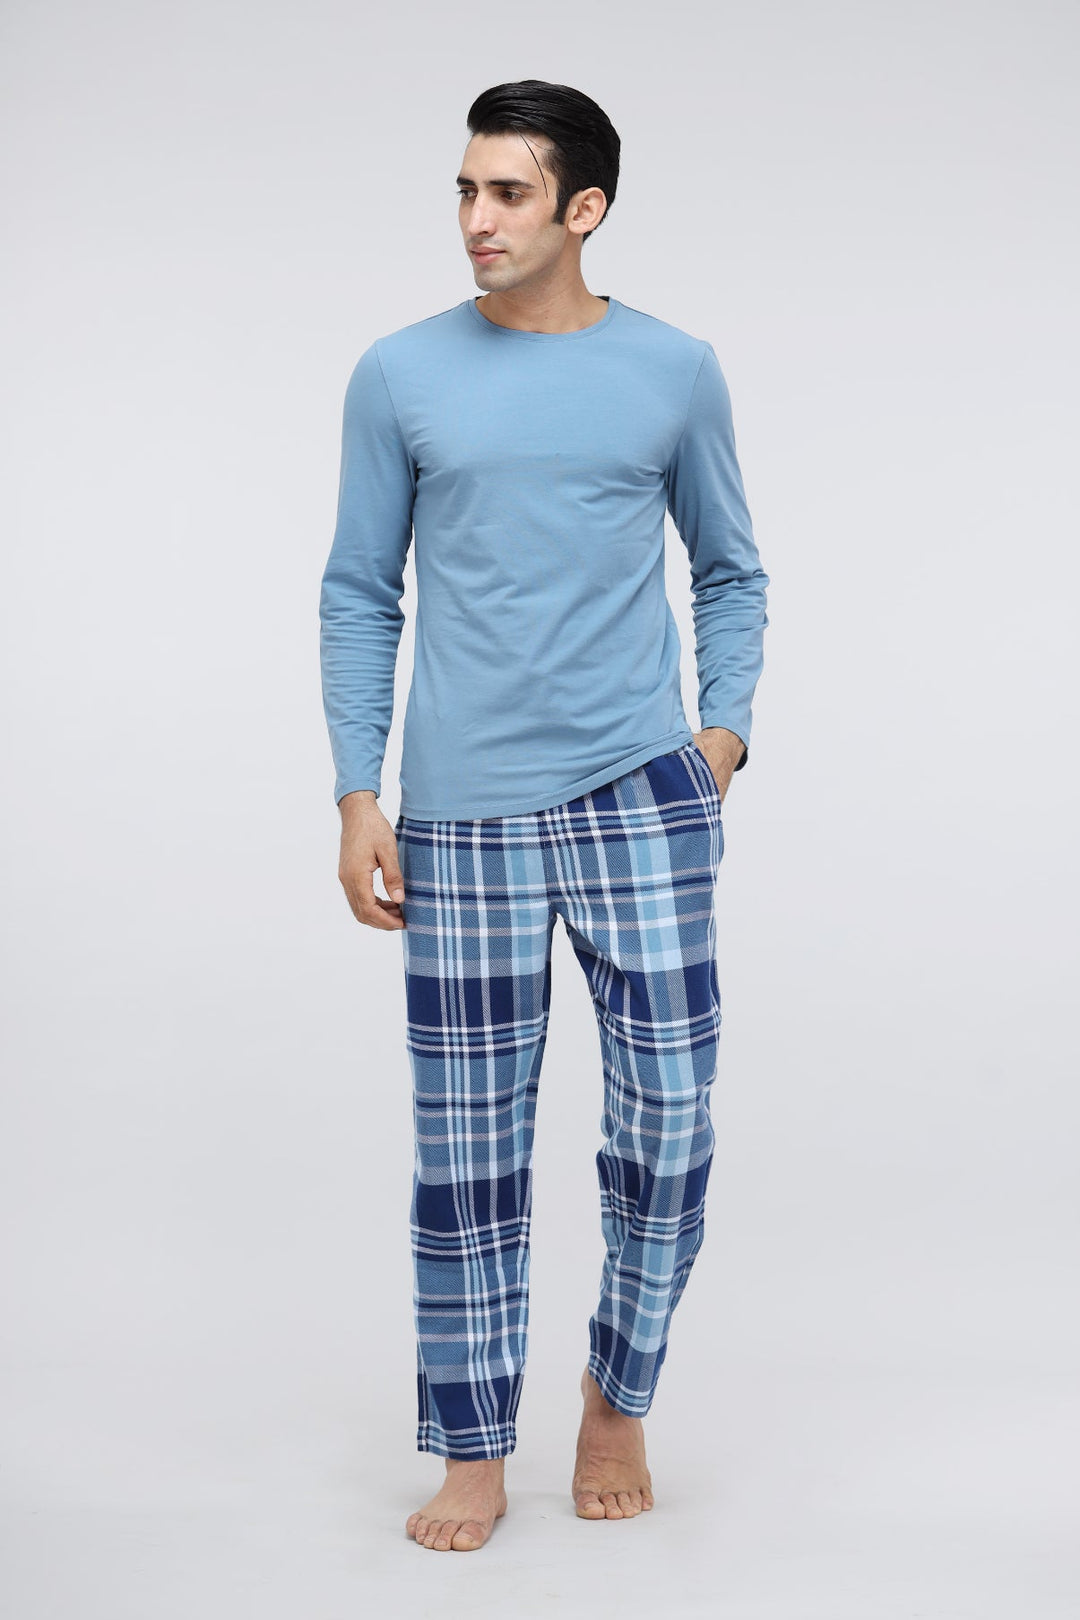 Men's Plaid flannel Pajamas